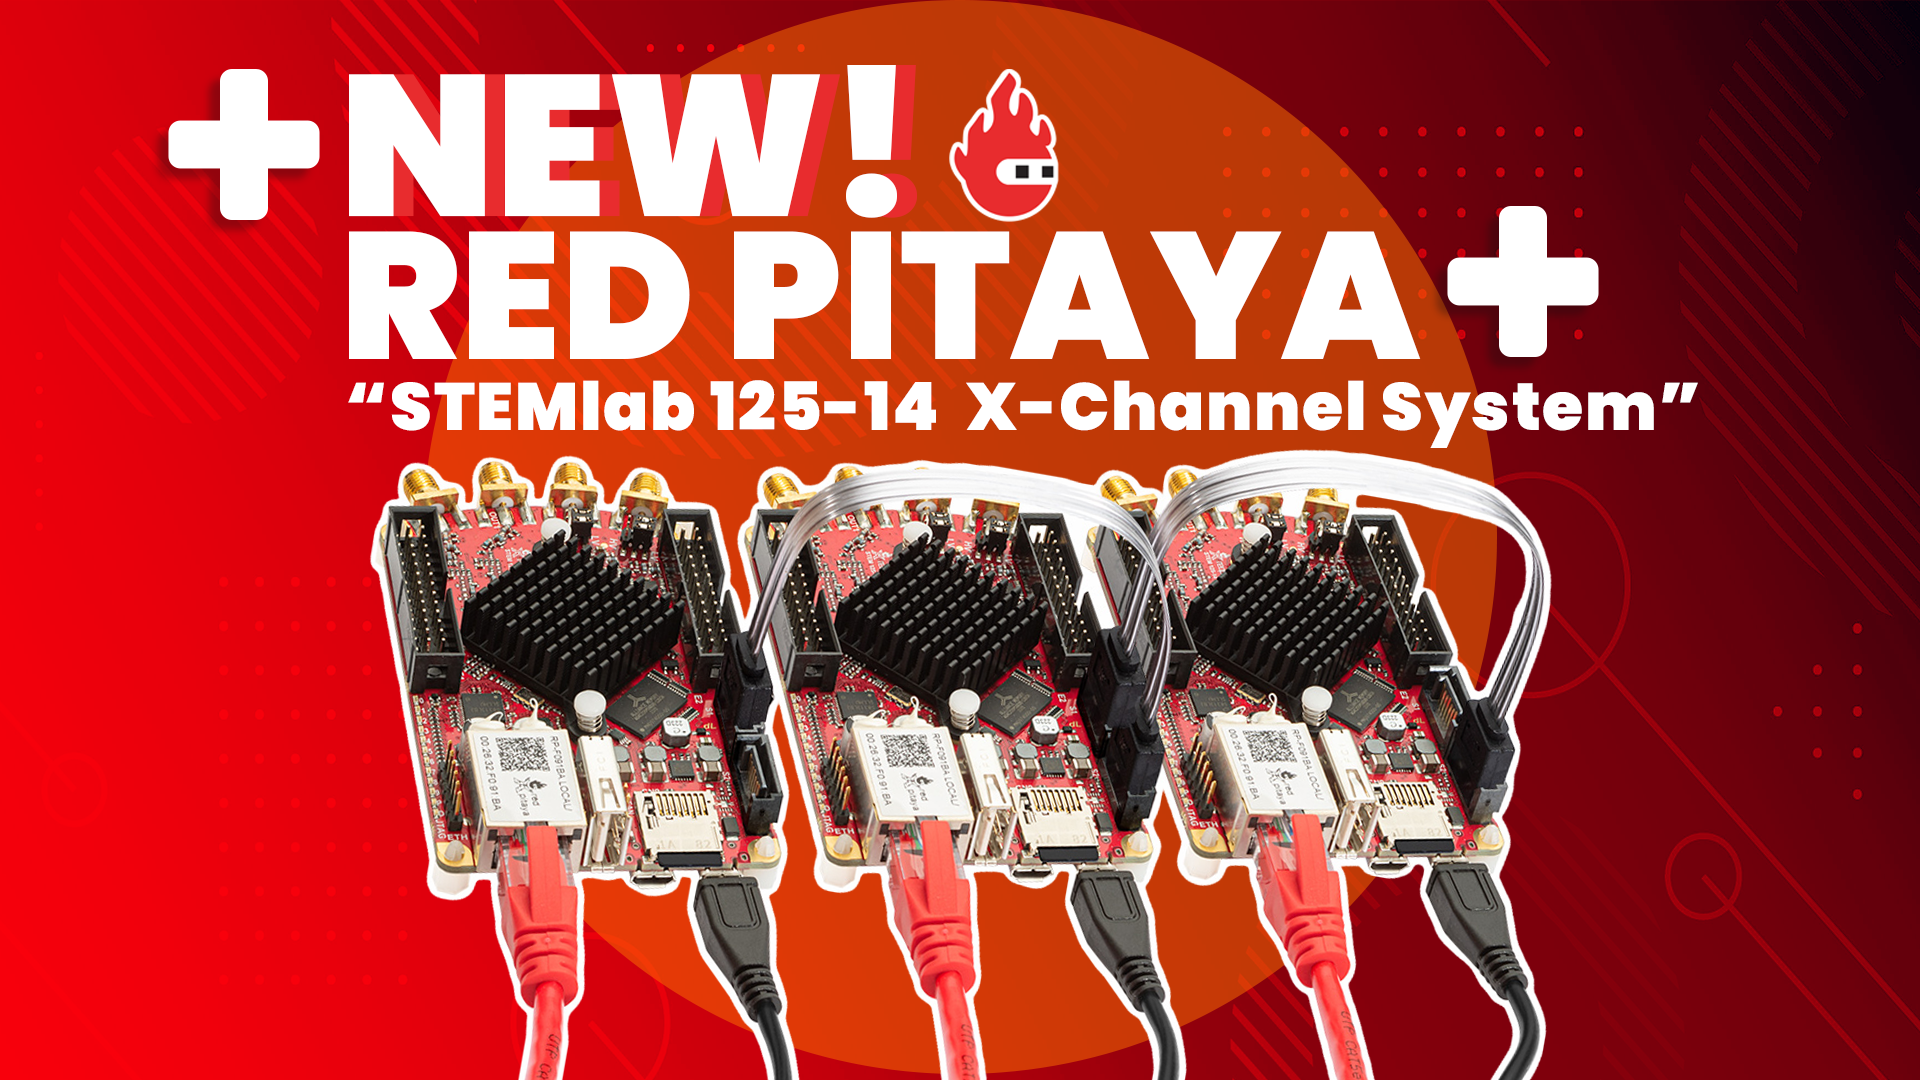 1_red pitaya_x-channel system (002)